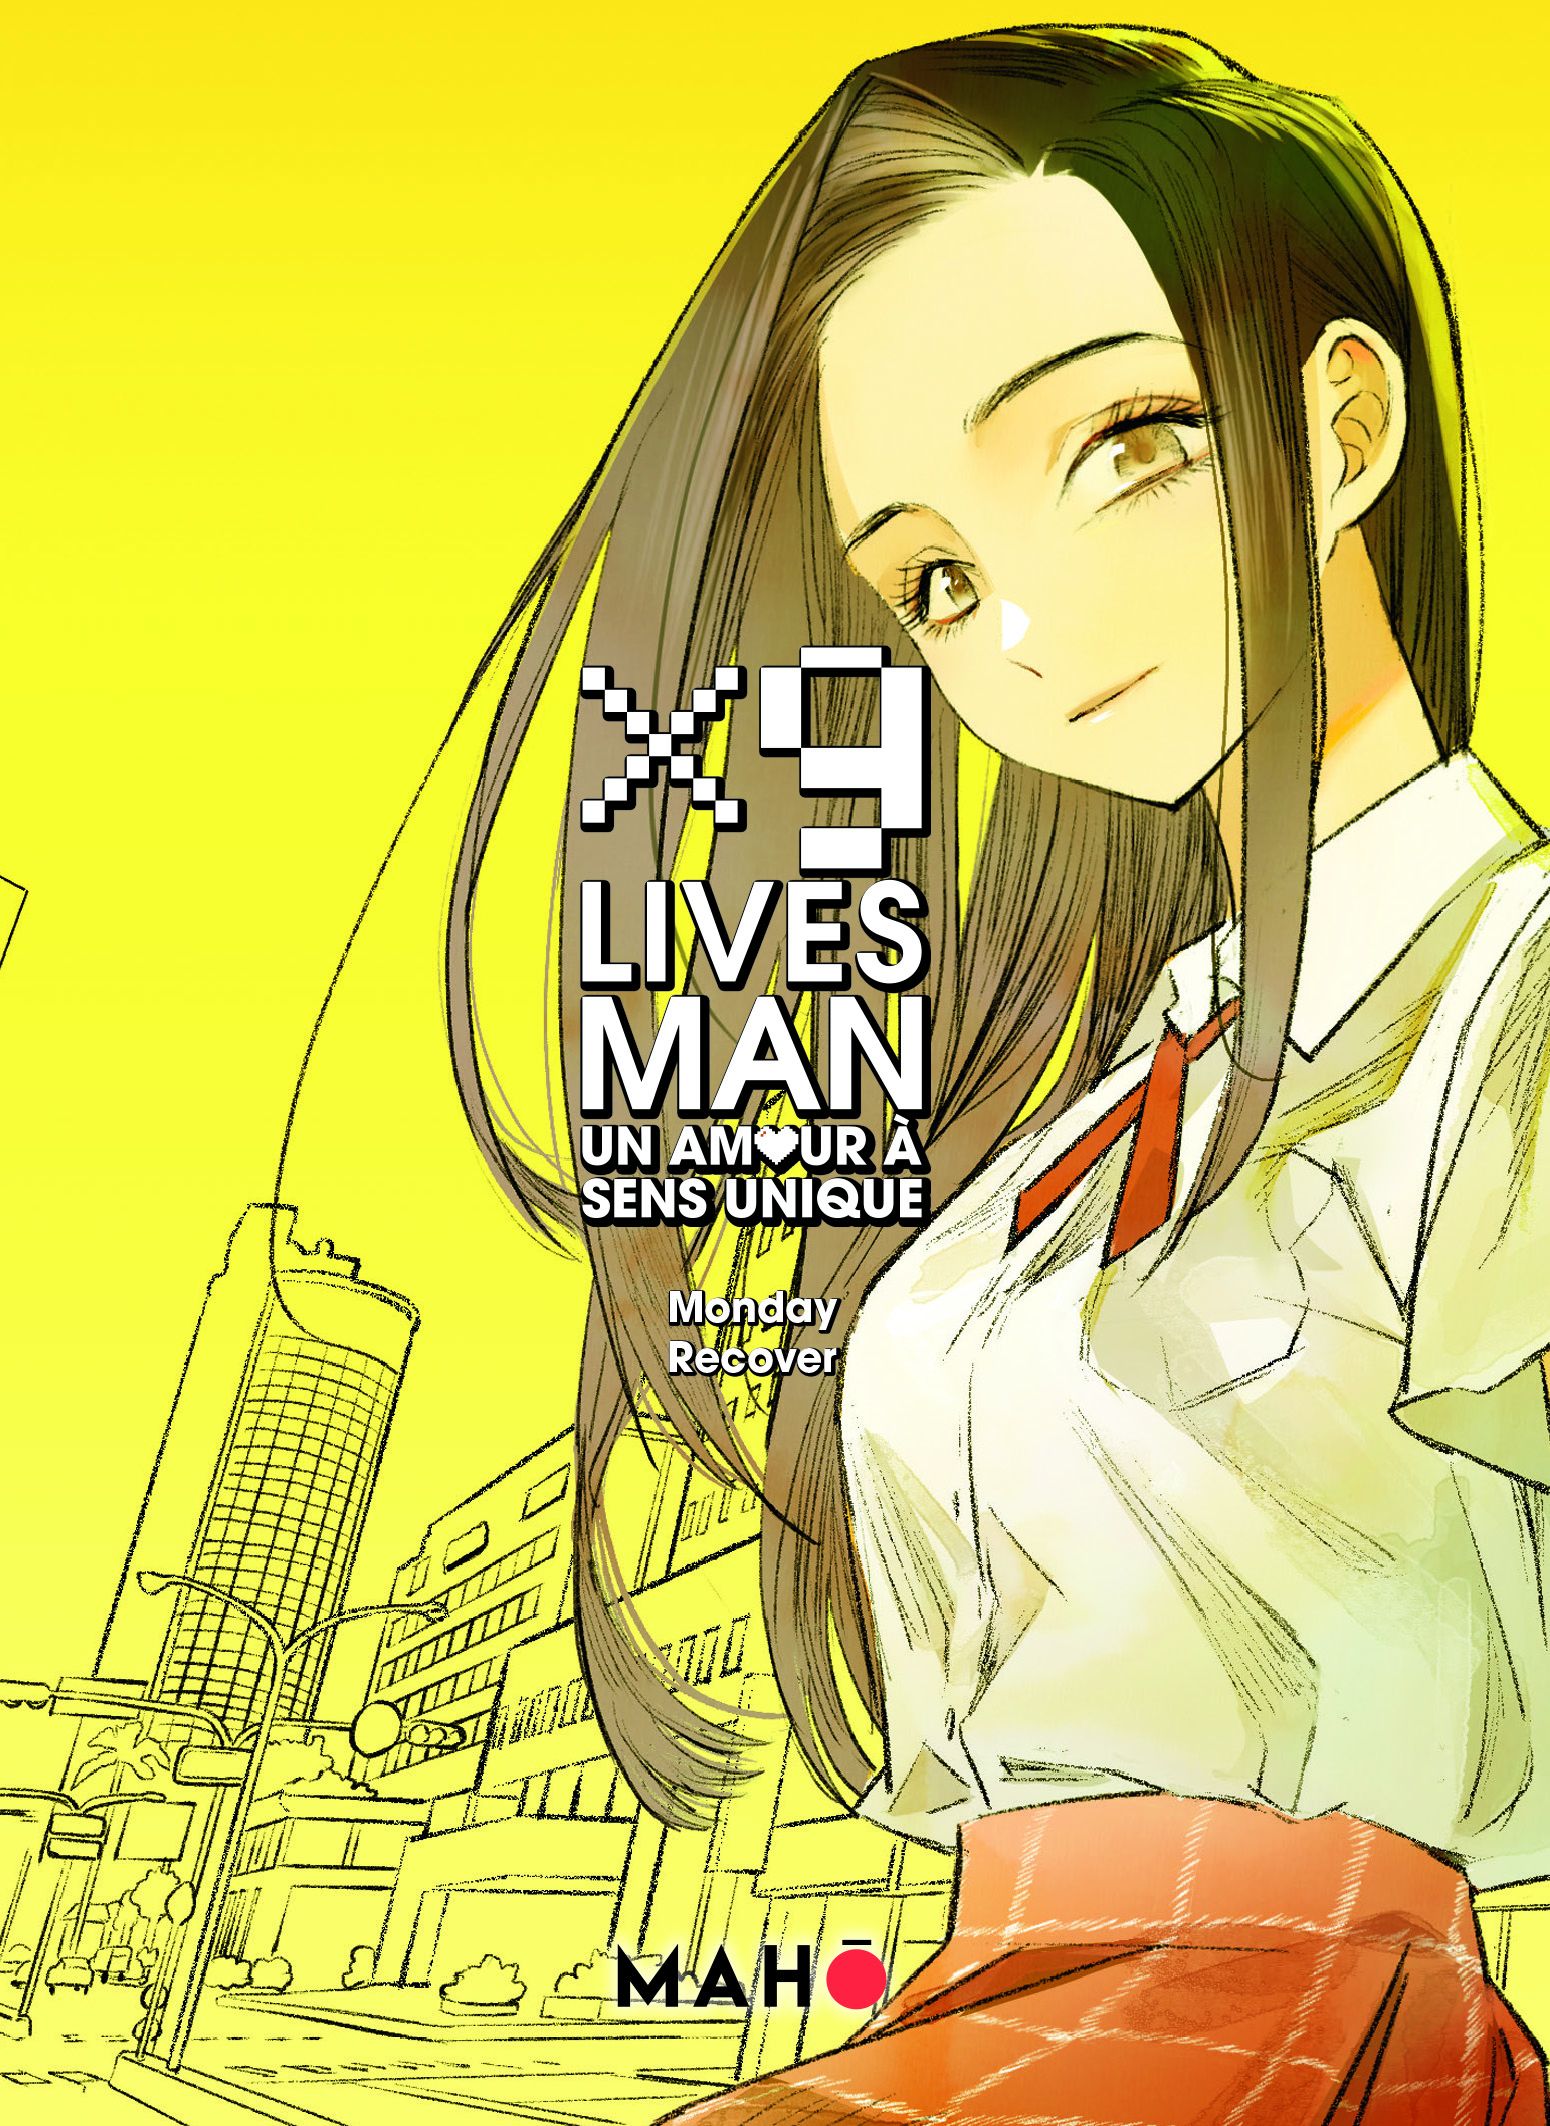 9 Lives Man Un Amour A Sens Unique Manga Manga News